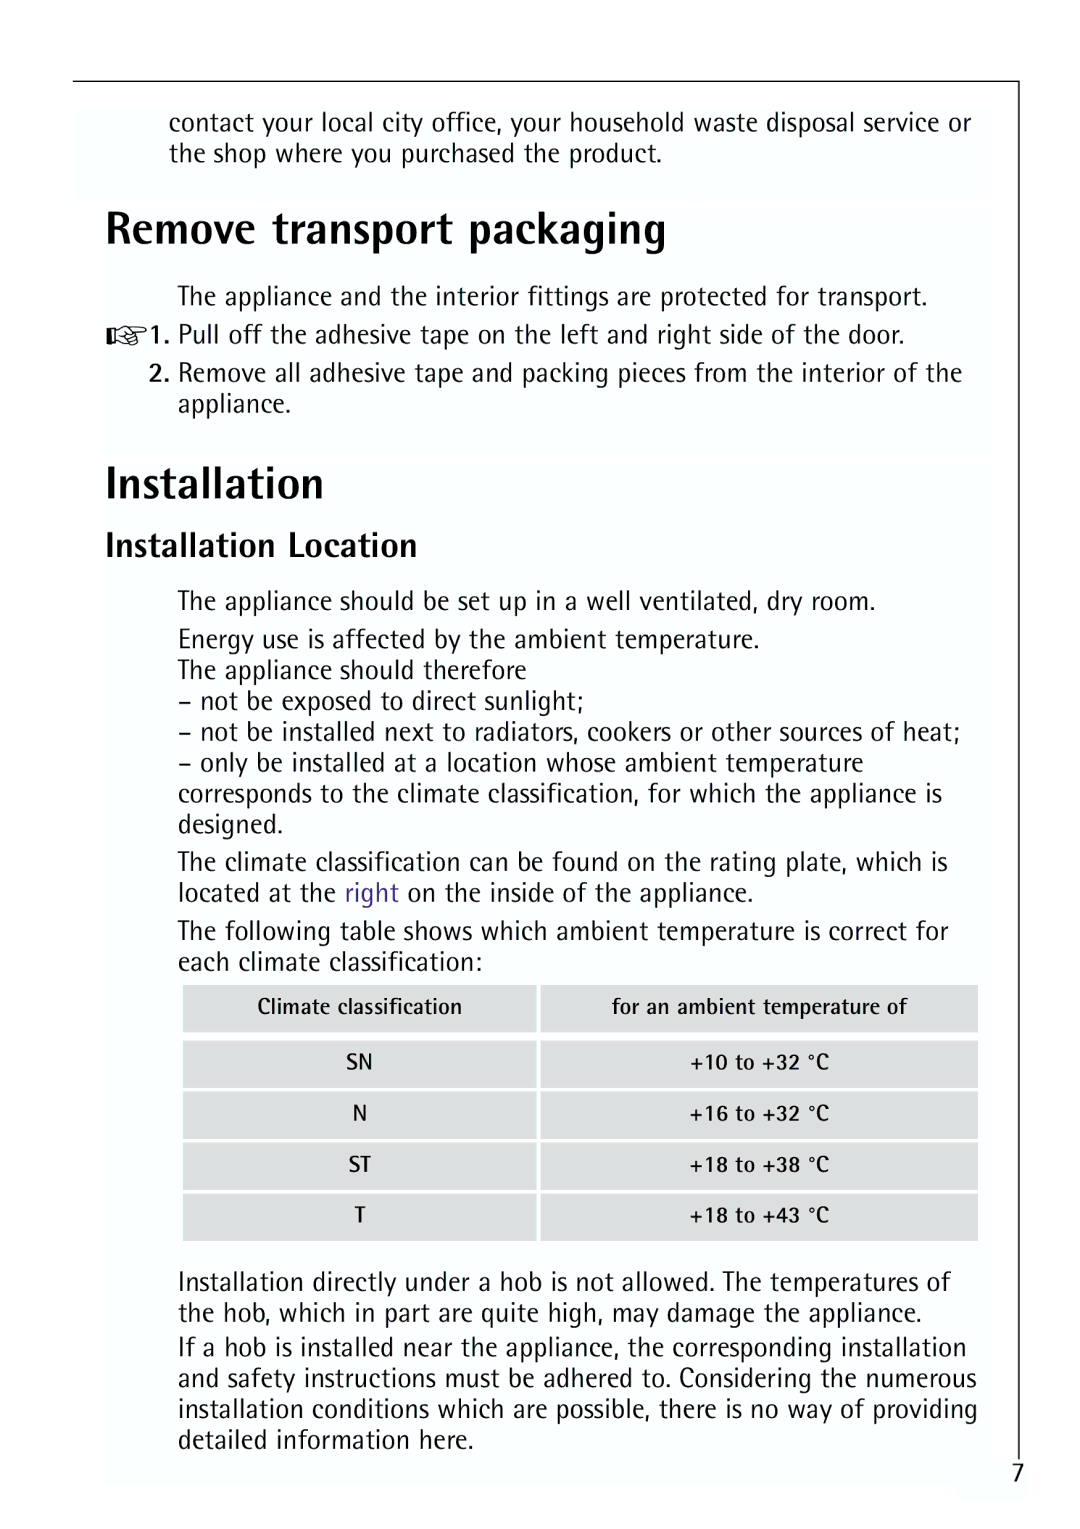 Electrolux U 96040-4 i installation instructions Remove transport packaging, Installation Location 